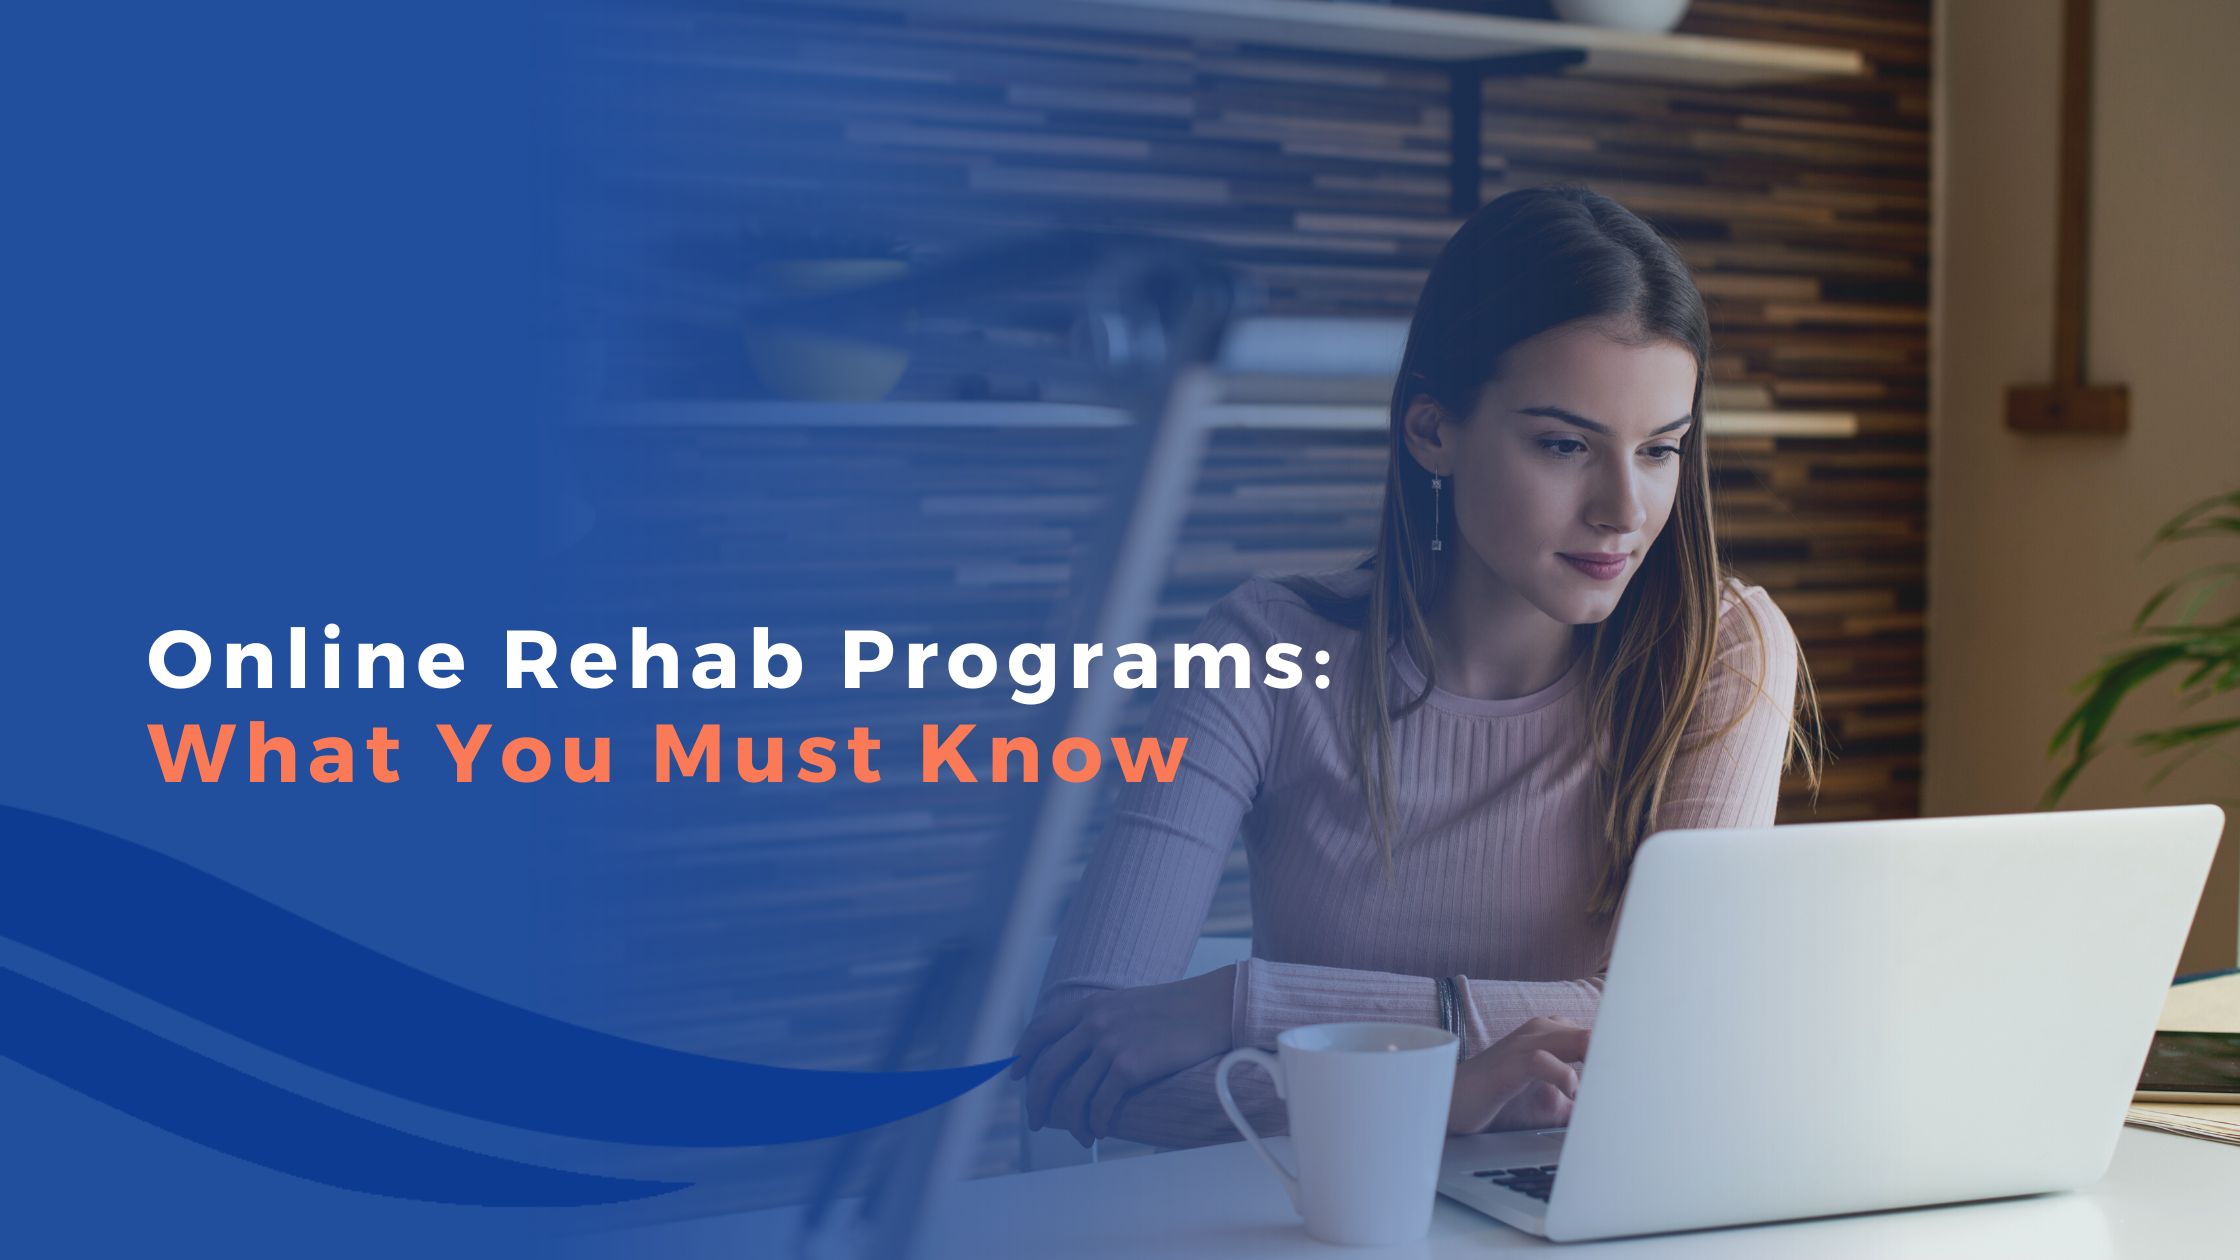 Online Rehab Programs